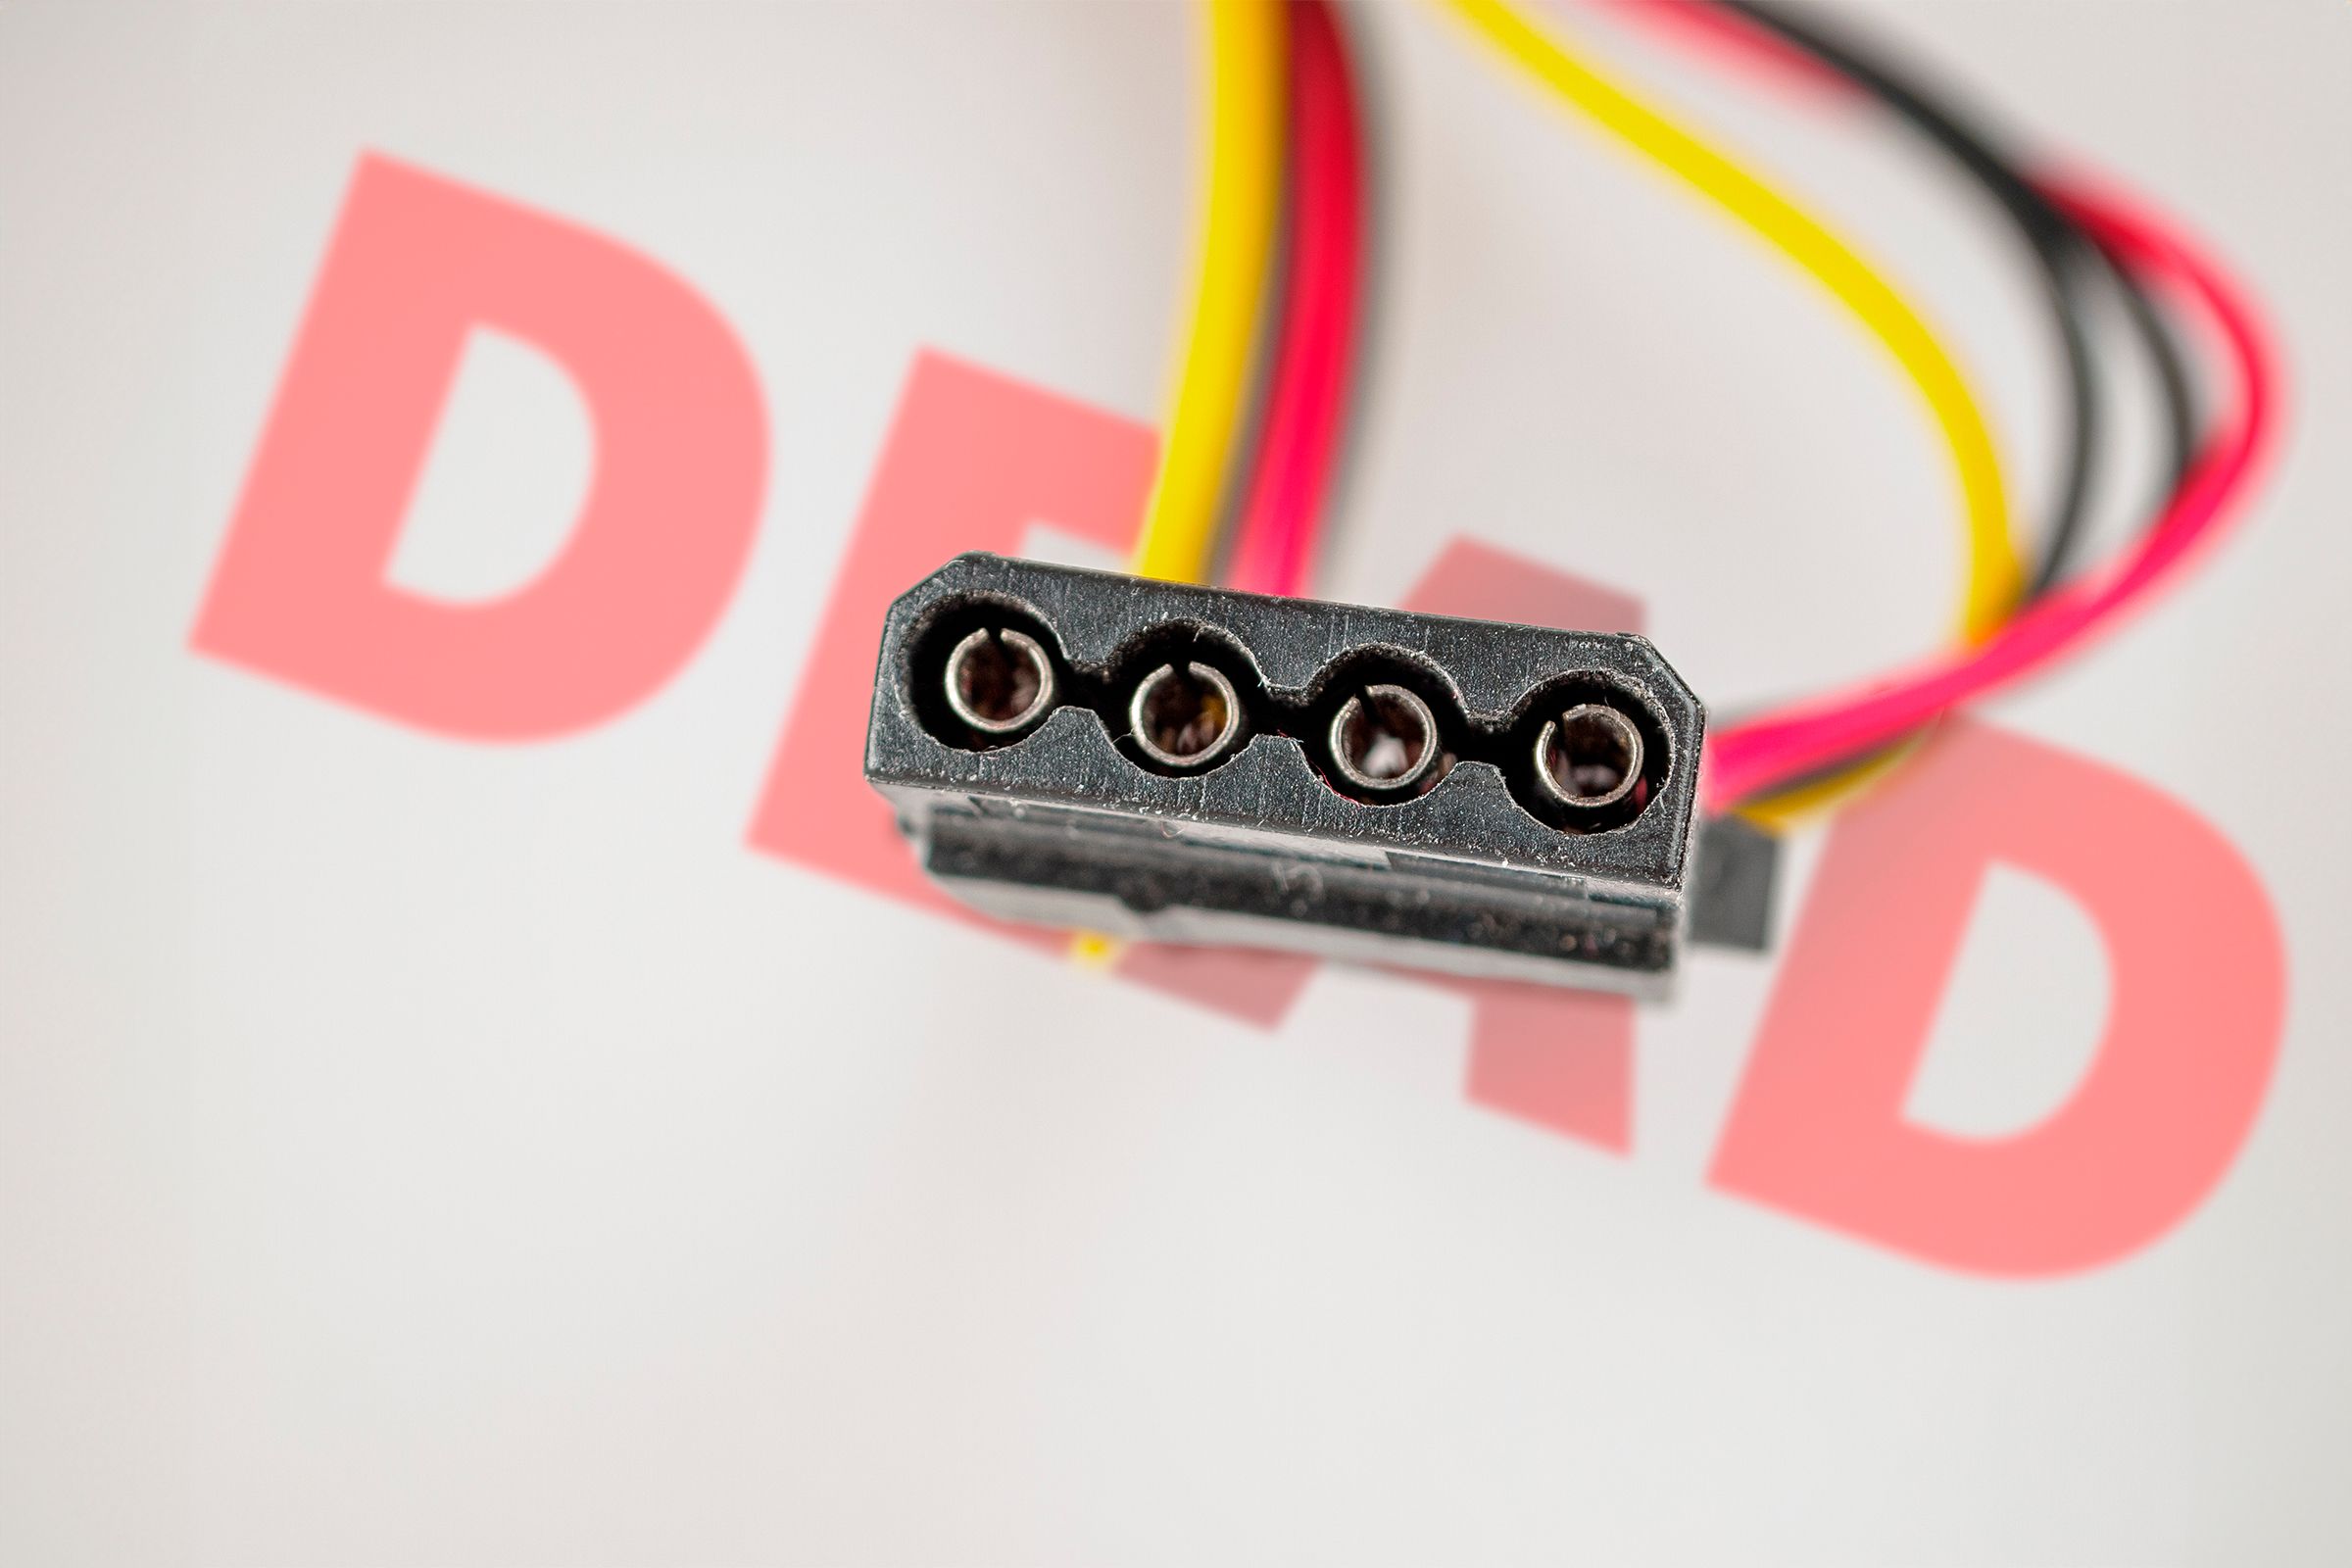 A 4-pin power connector.